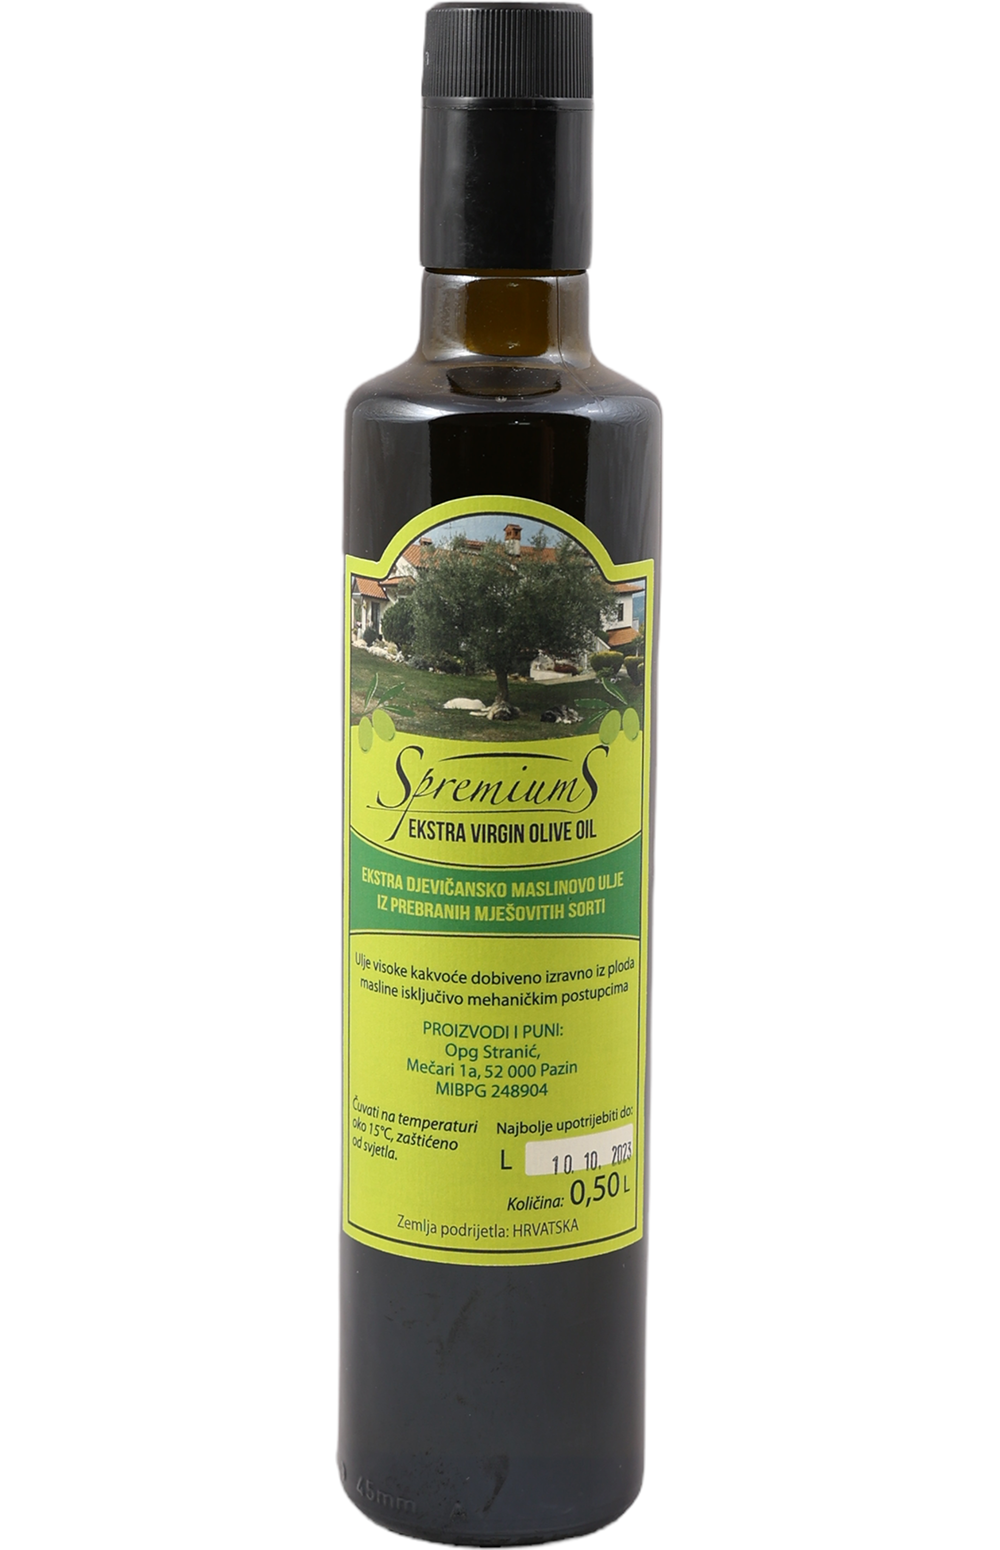 Spremiums Extra Virgin Olive Oil